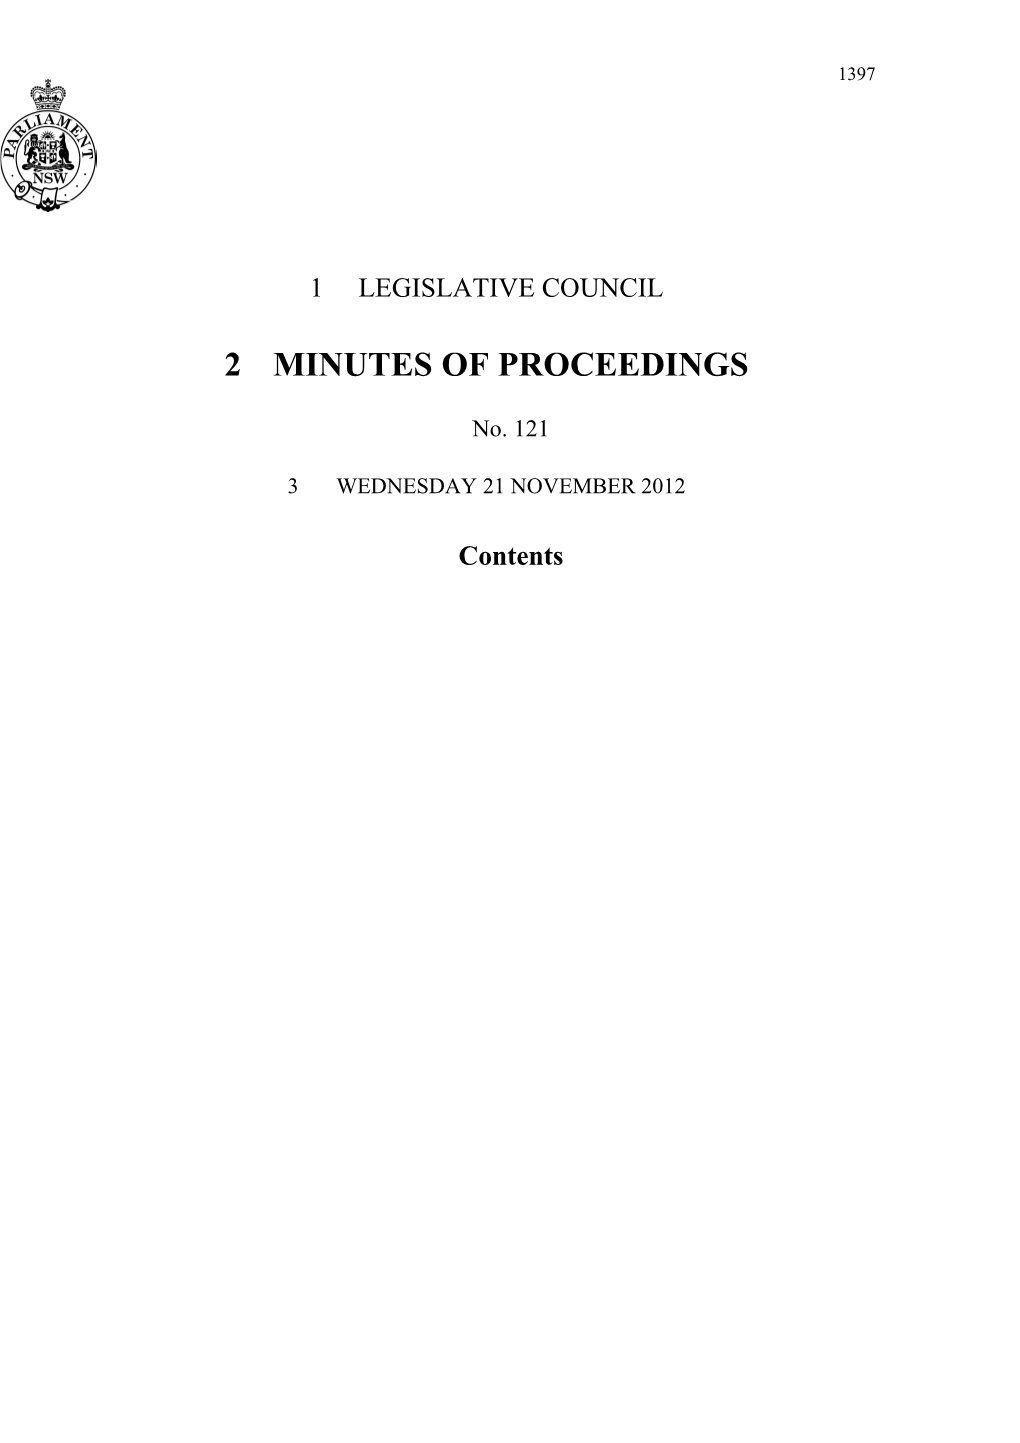 Legislative Council Minutes No. 121 Wednesday 21 November 2012